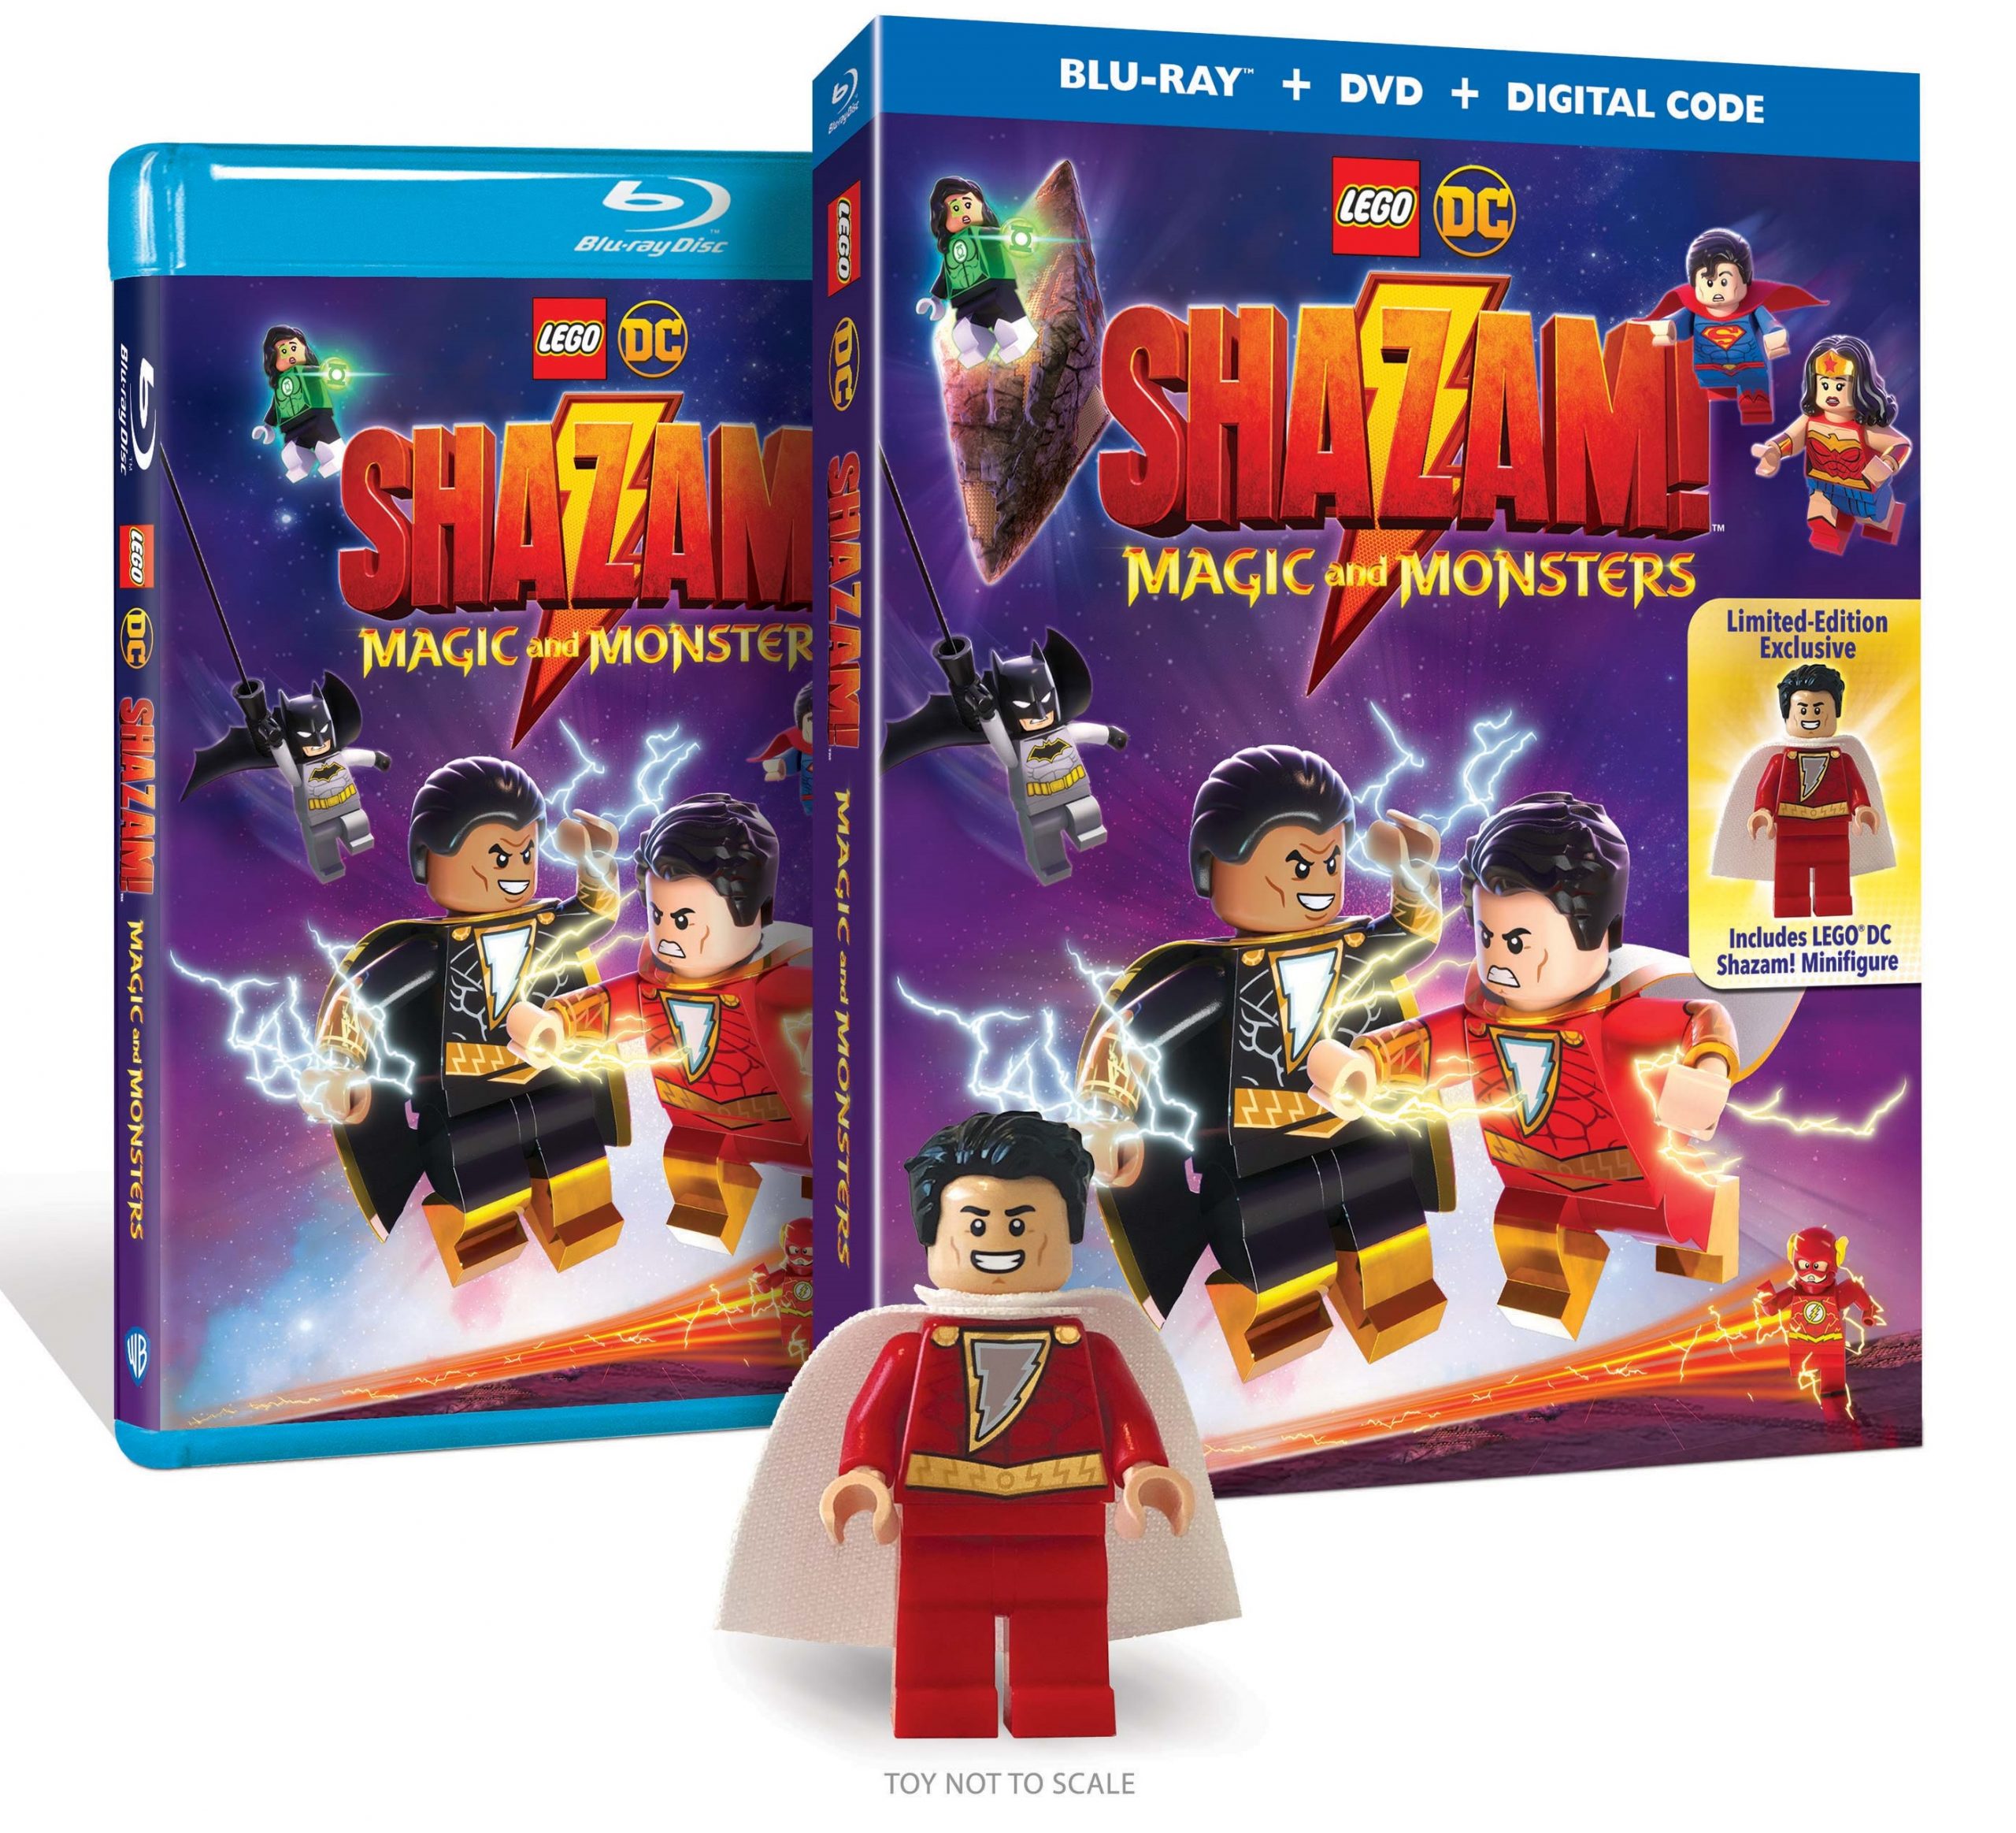 Latest LEGO DC Animated Film Announced Focusing on Shazam - The Batman  Universe